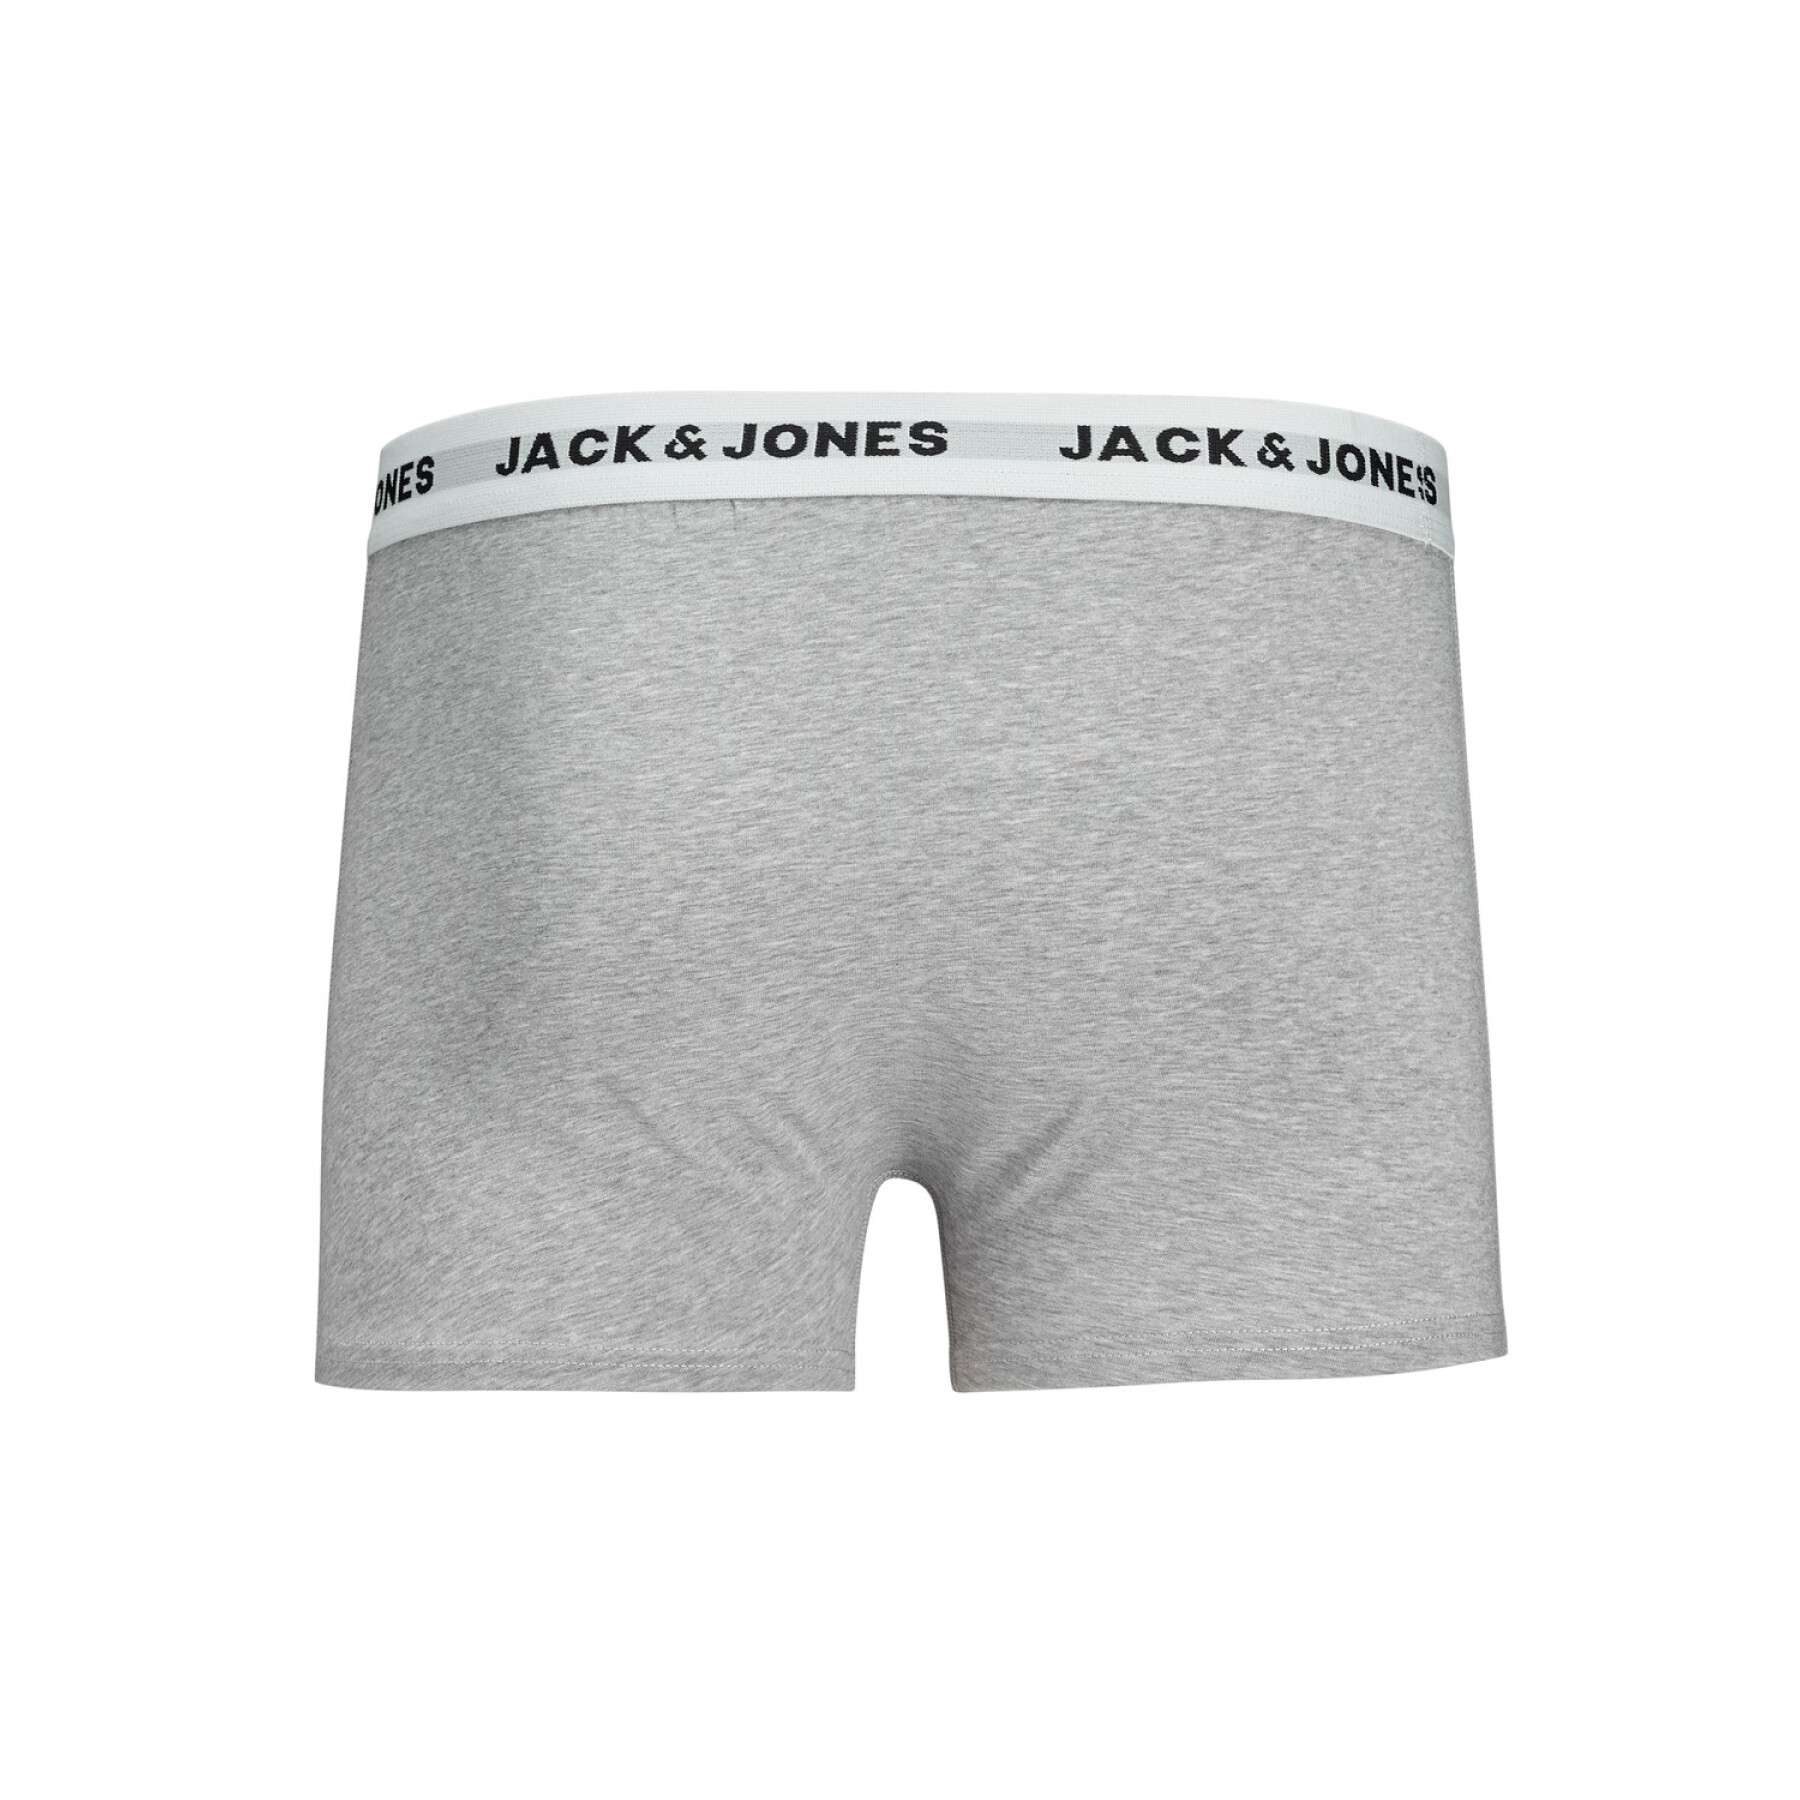 Set of 5 boxers Jack & Jones multicolores 